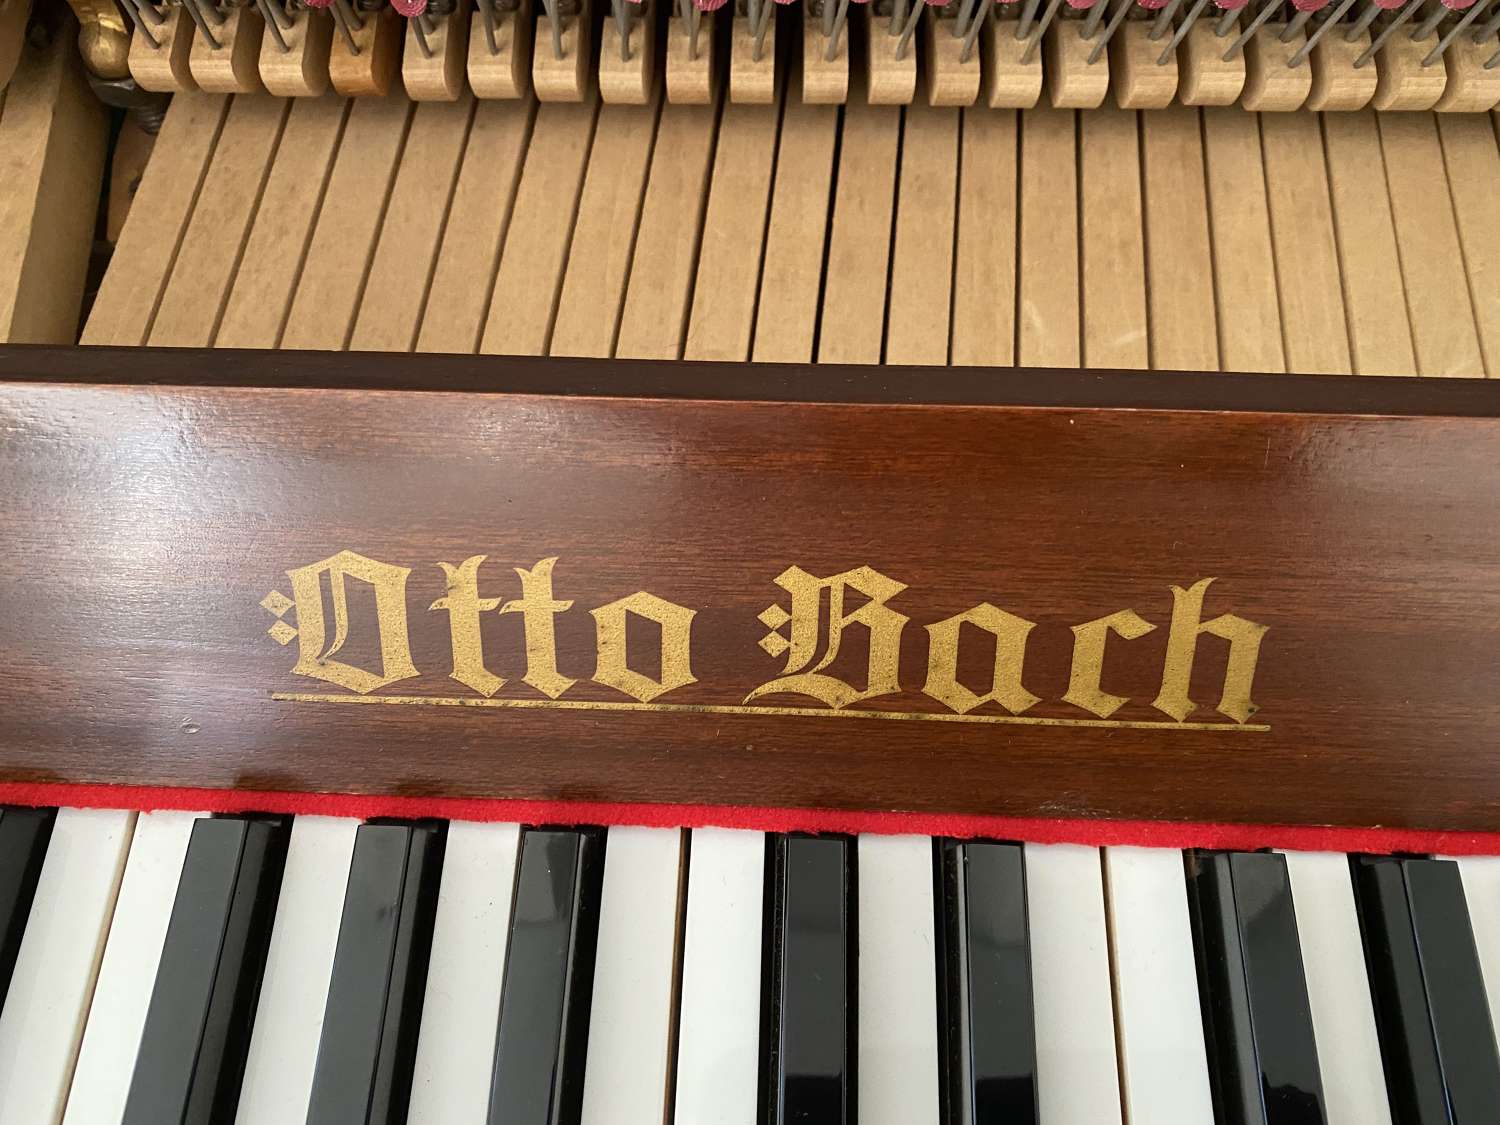 Acumulativo Mira hermosa Otto Bach (Knight piano)